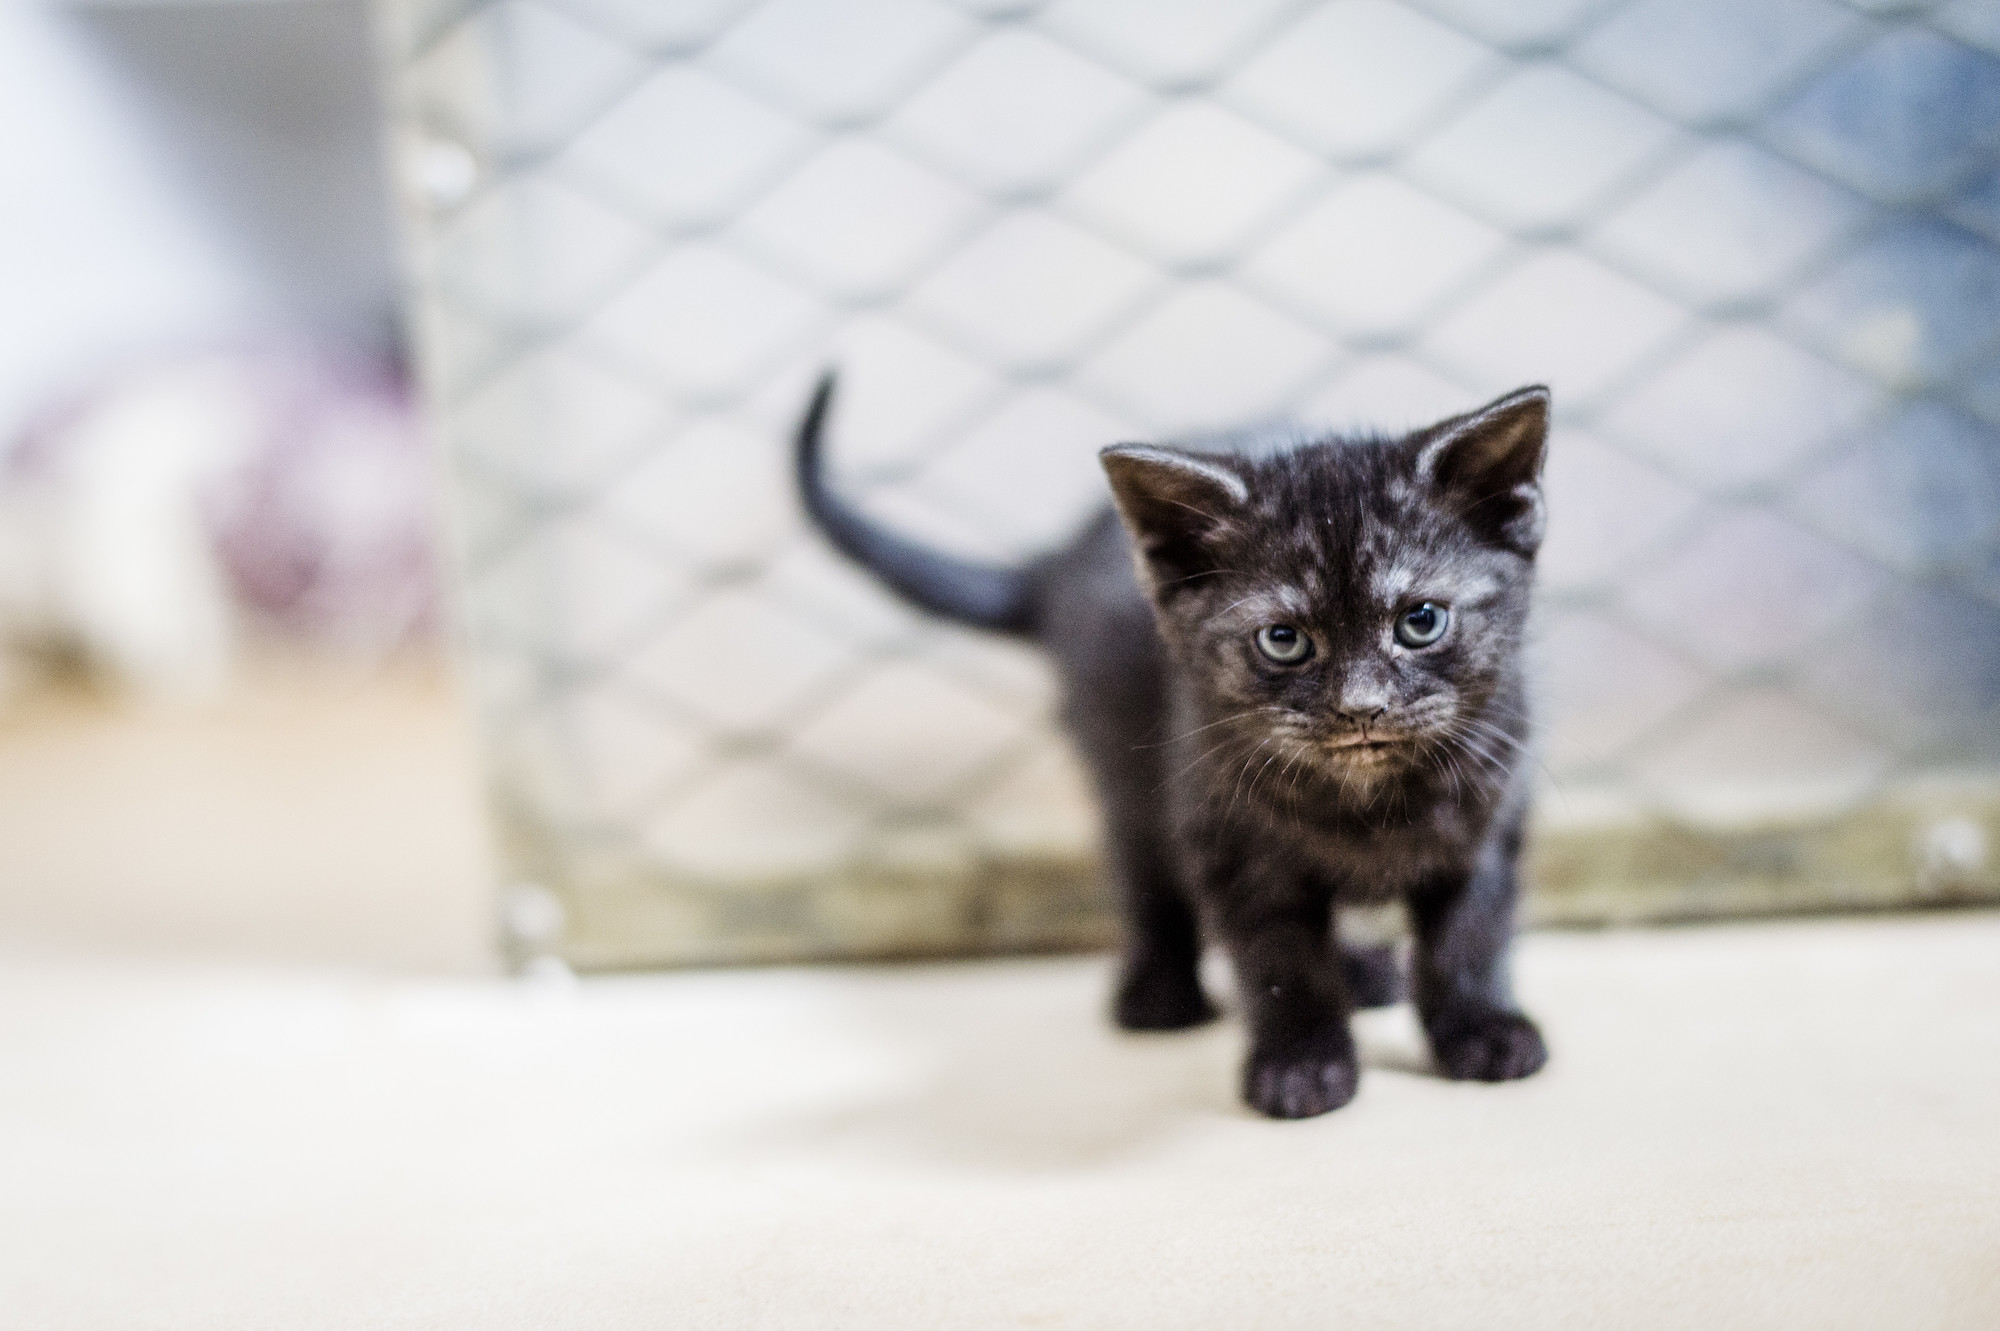 Kitten walking in front of a mesh background